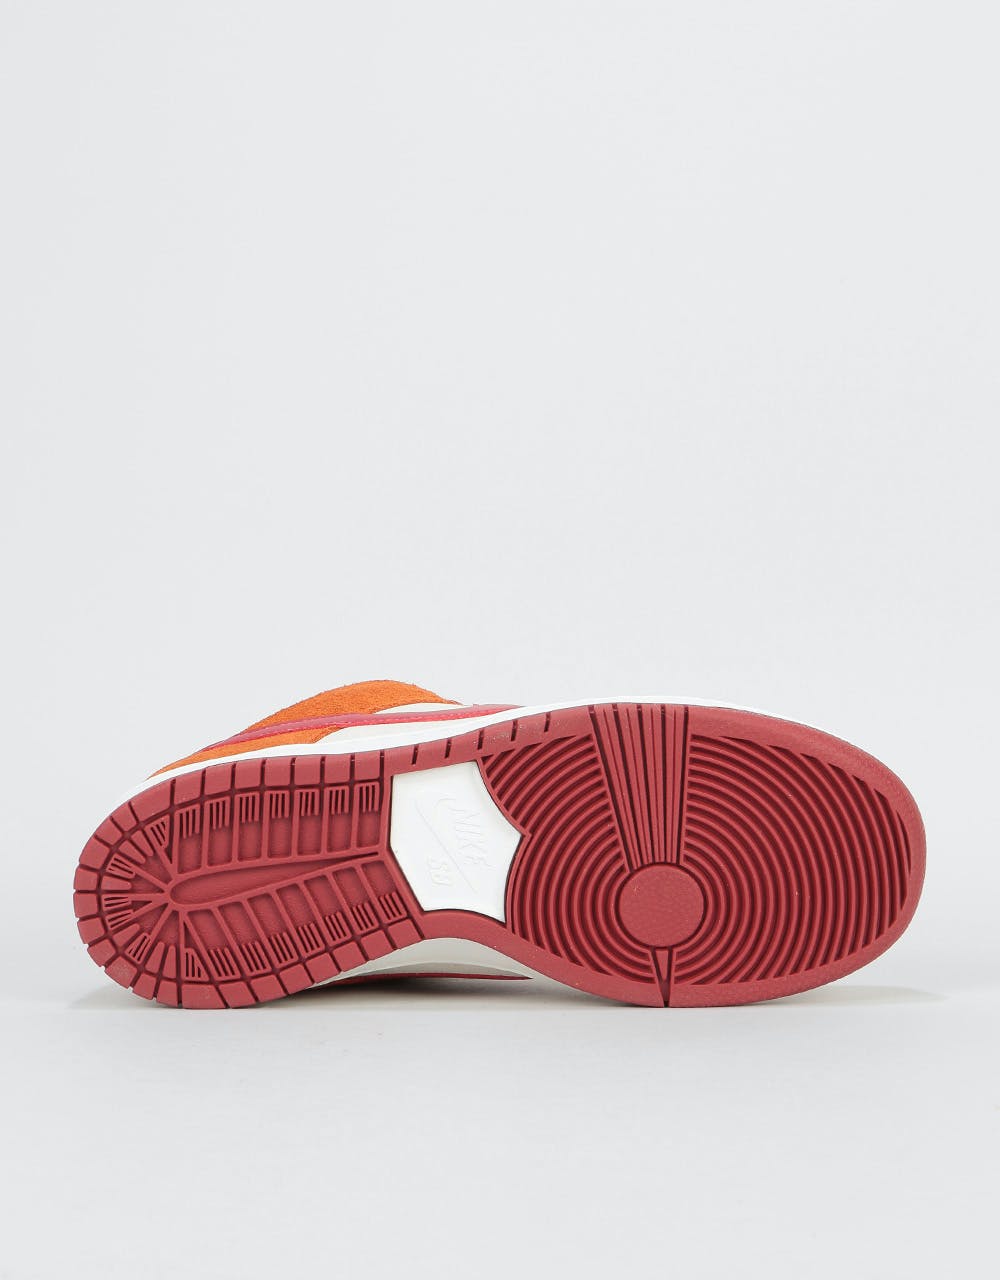 Nike SB Dunk Low Pro Skate Shoes - Dark Russet/Cedar-Summit White